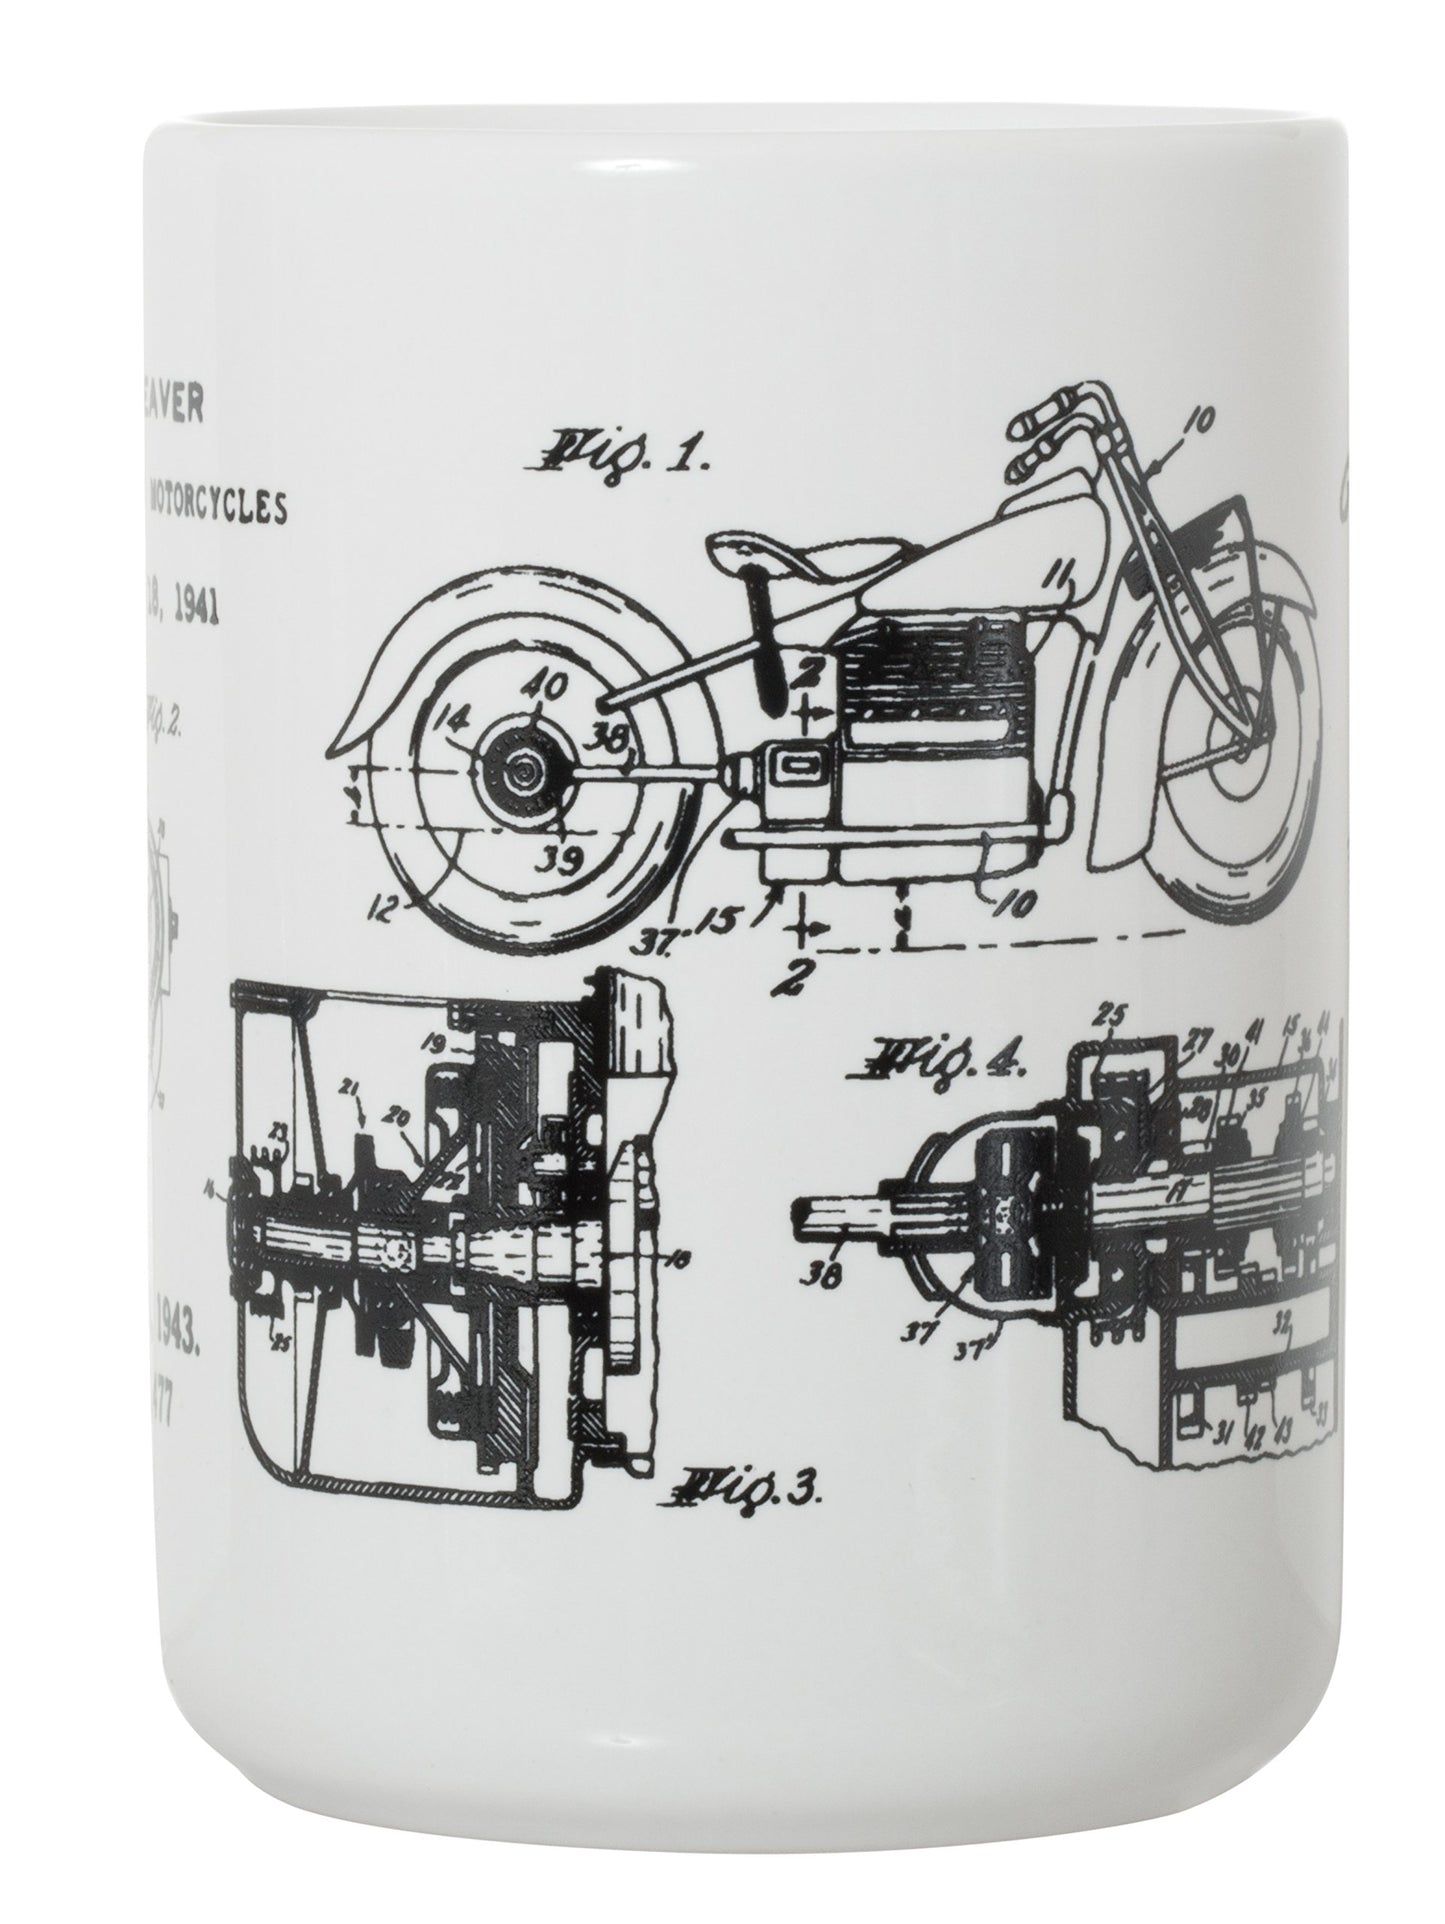 Motorcycle Shaft Drive Patent Blueprint